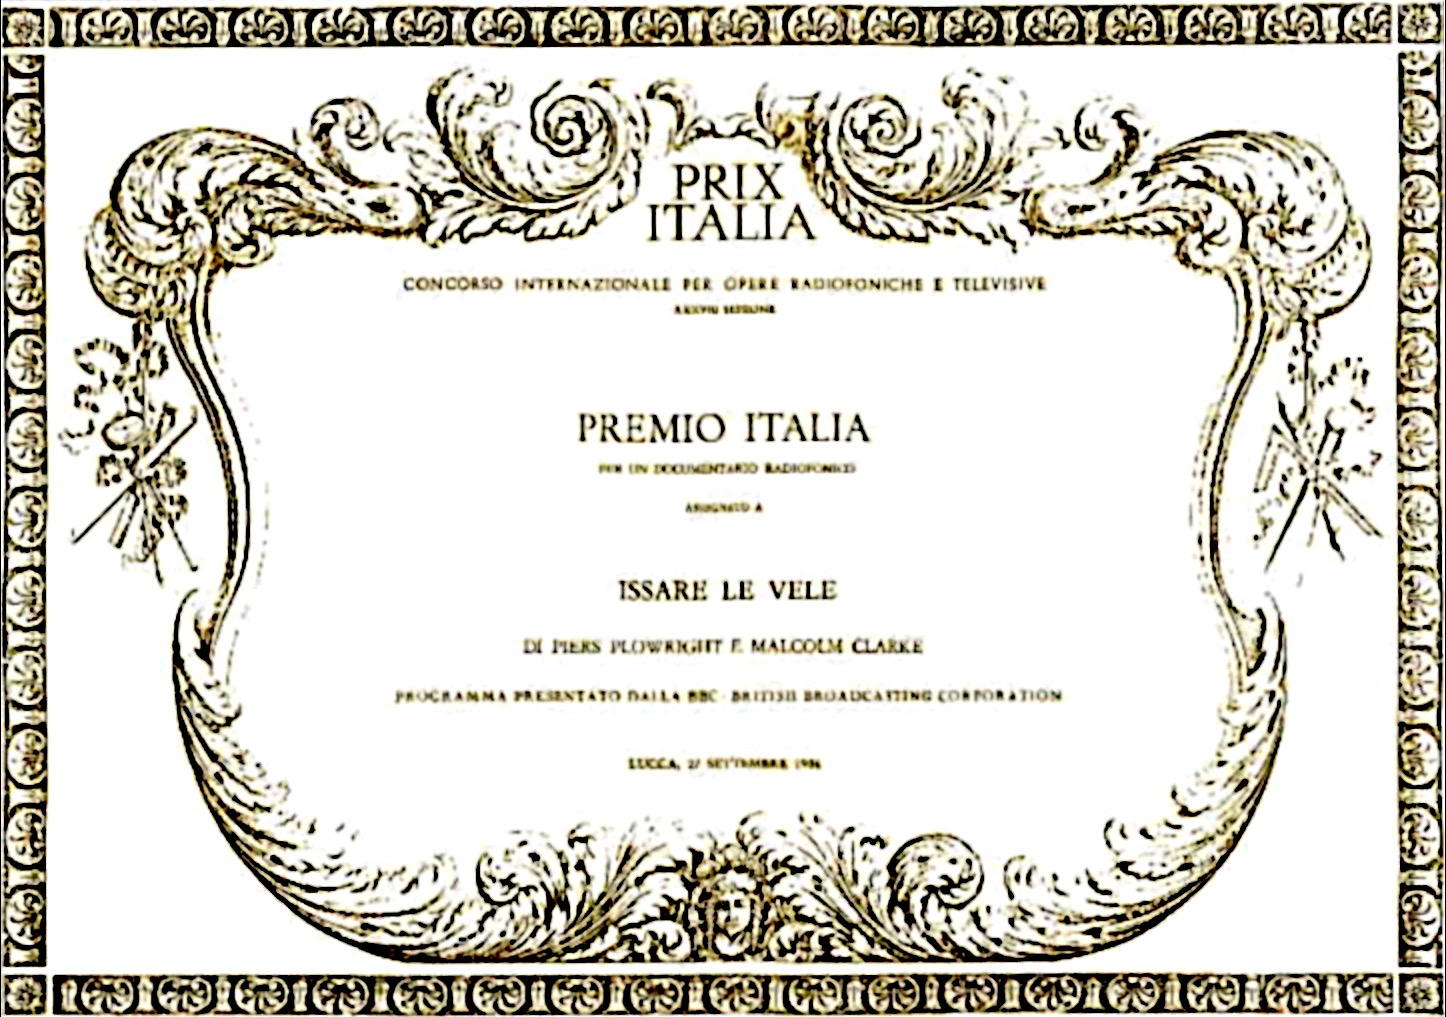 Italia Prize